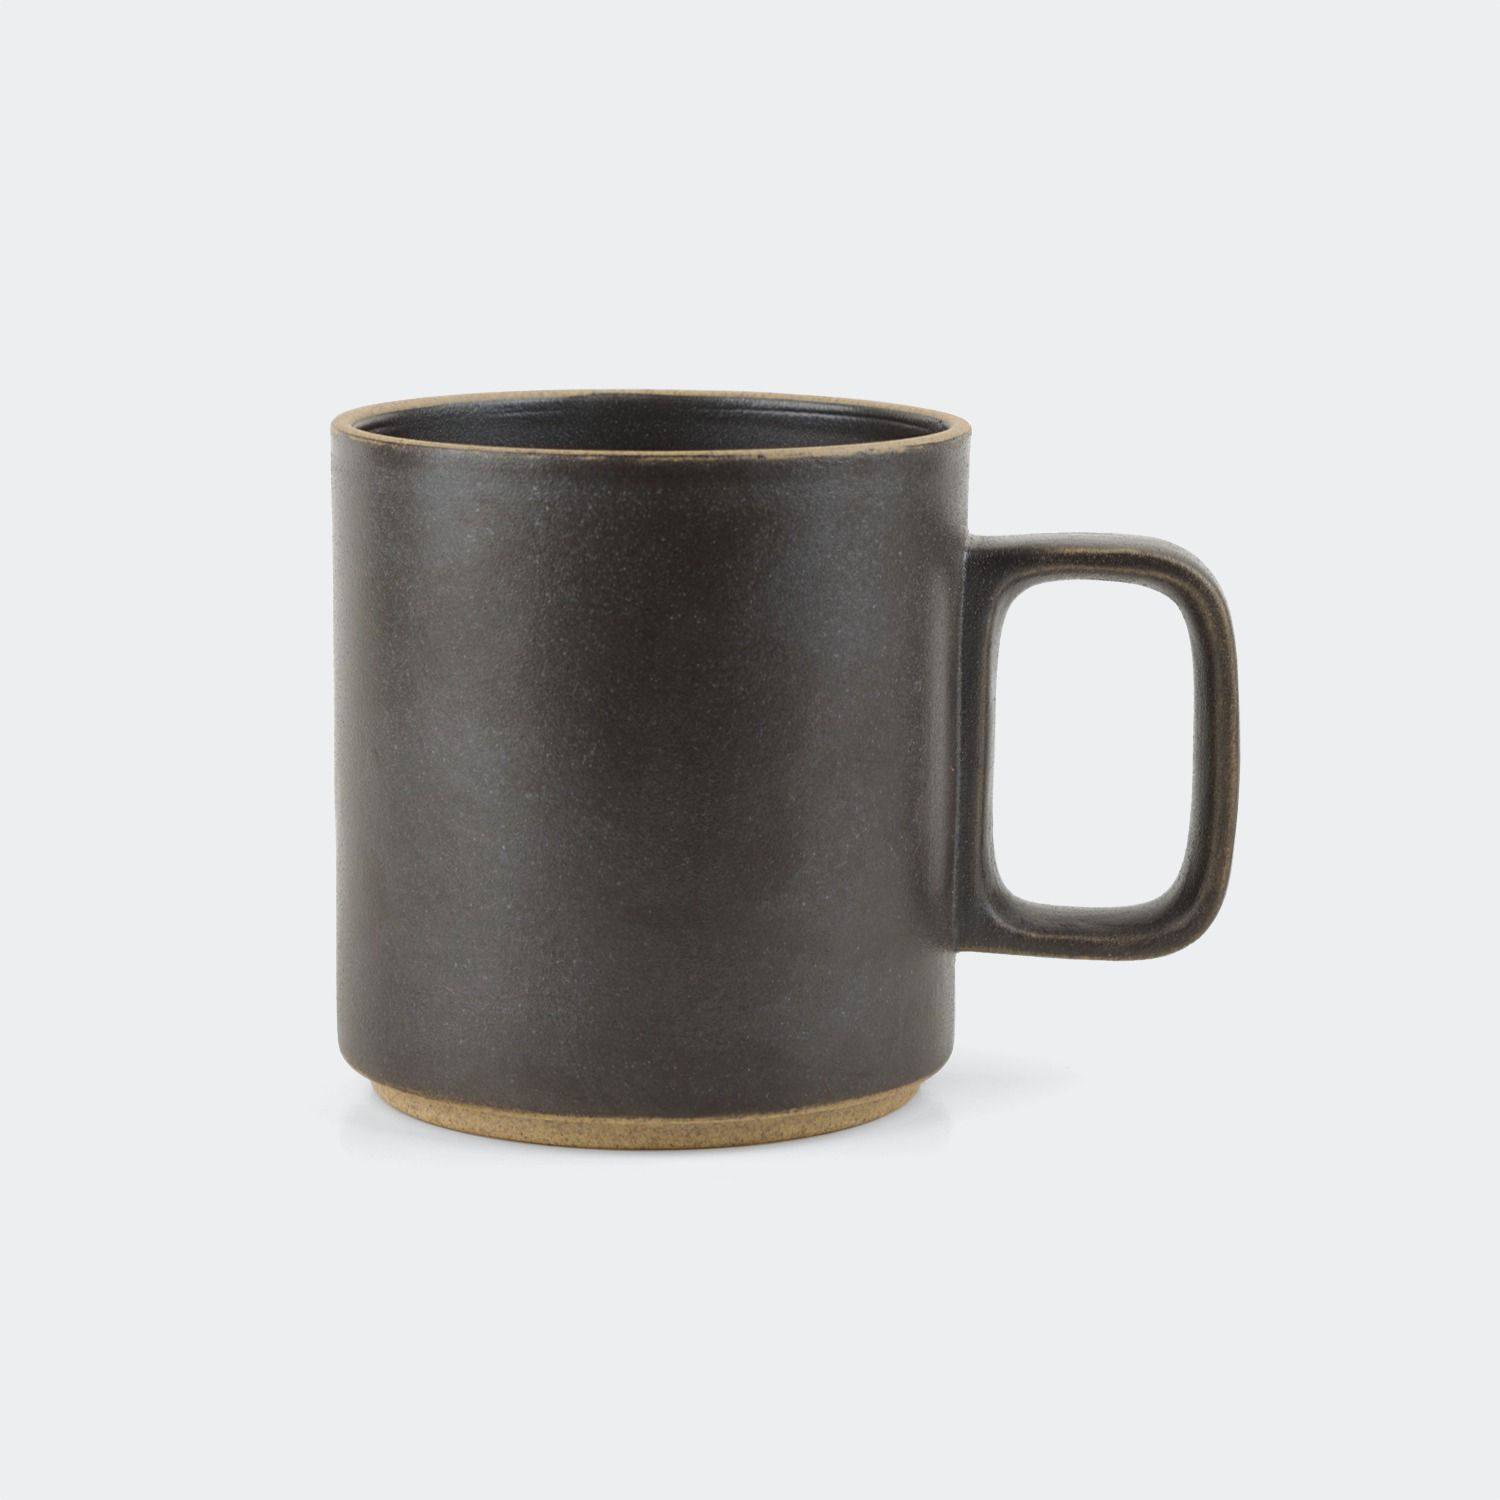 Hasami Porcelain Mug in Black 13 oz. - KANSO #select size_13 oz.